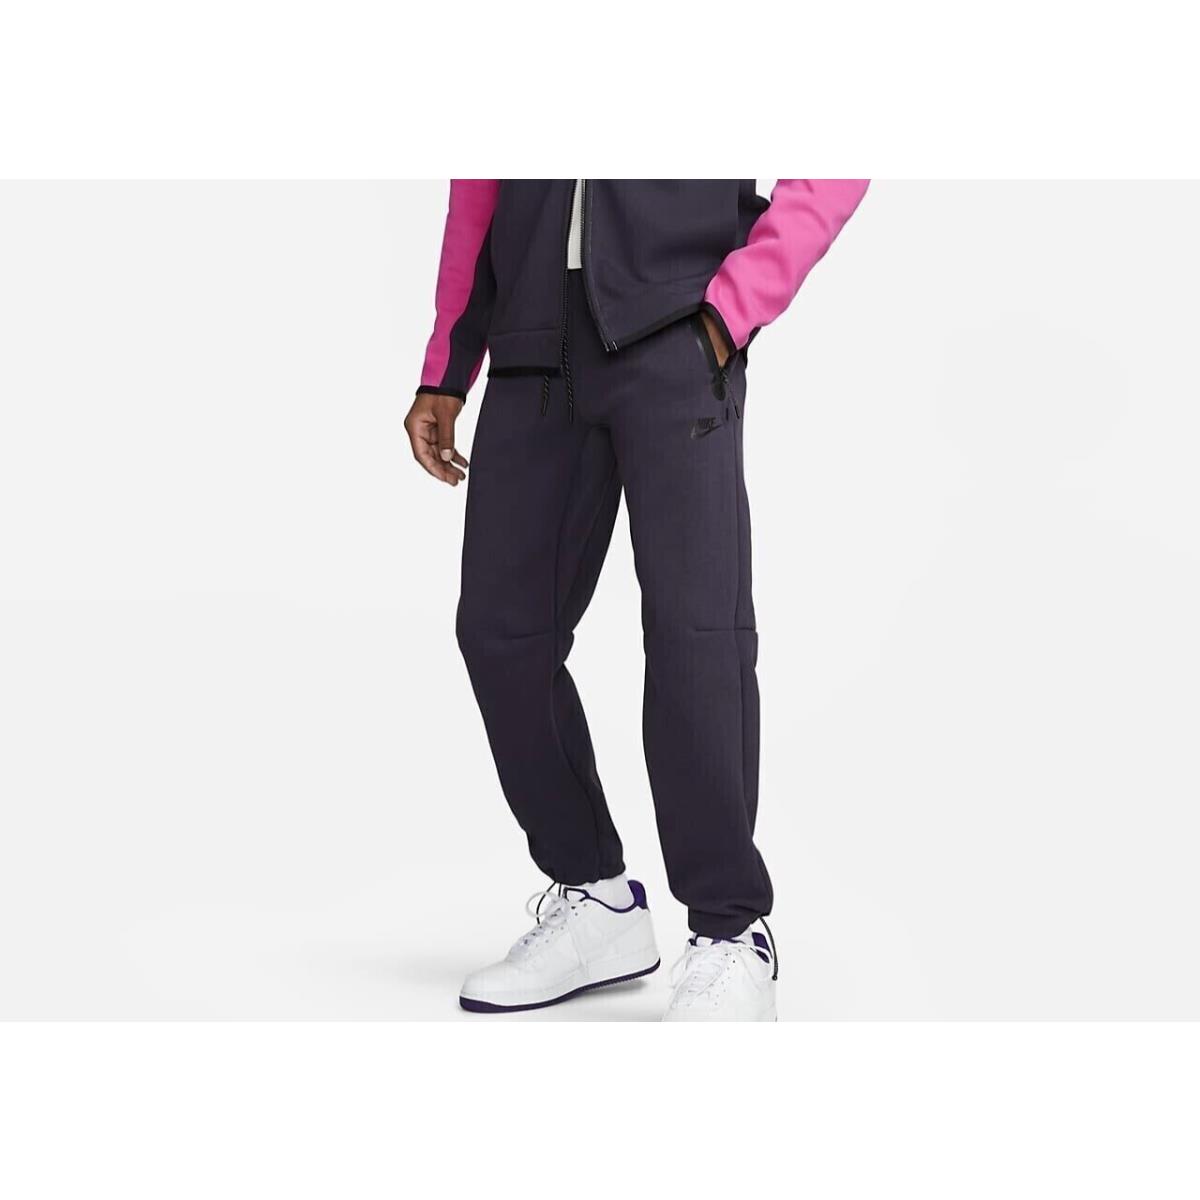 Nike clothing  - Purple 3